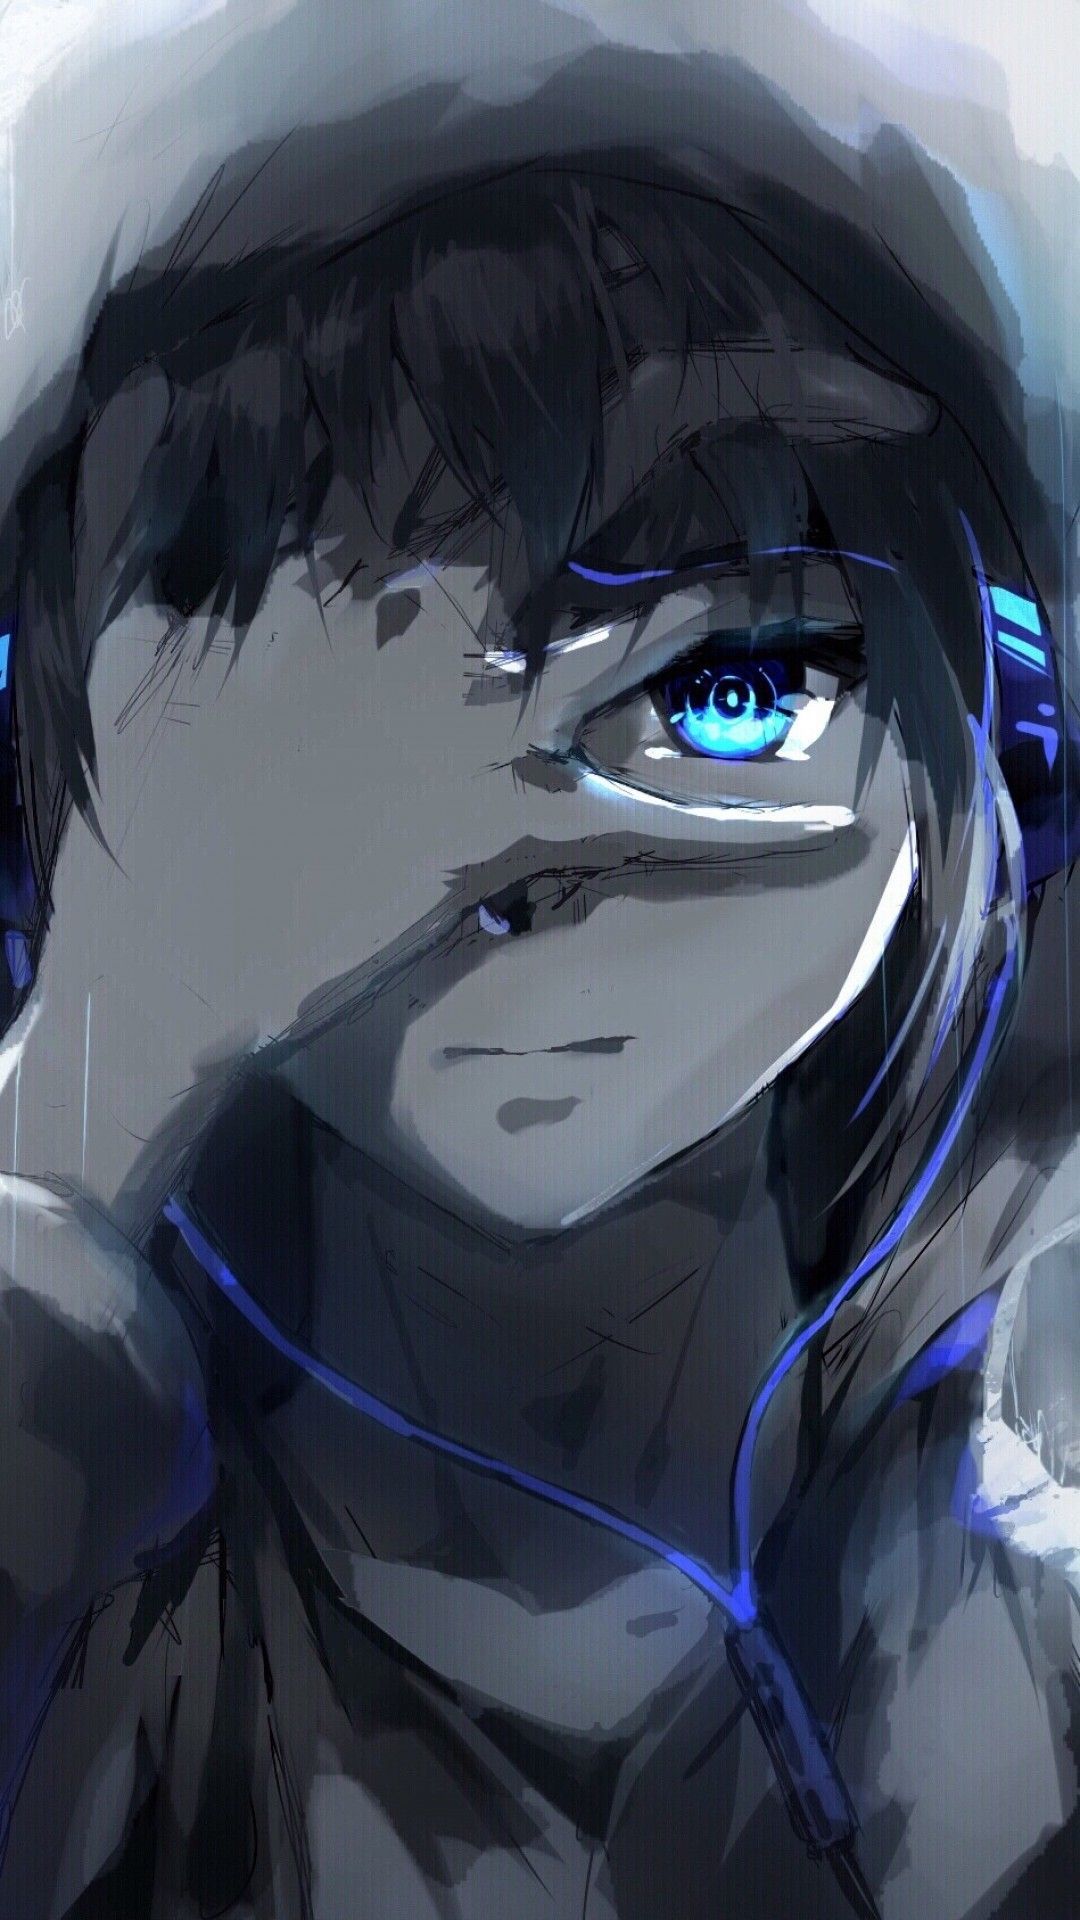 Anime Boy, Hoodie, Blue Eyes, Headphones, Painting. Anime, Hình vẽ anime, Cô gái trong anime